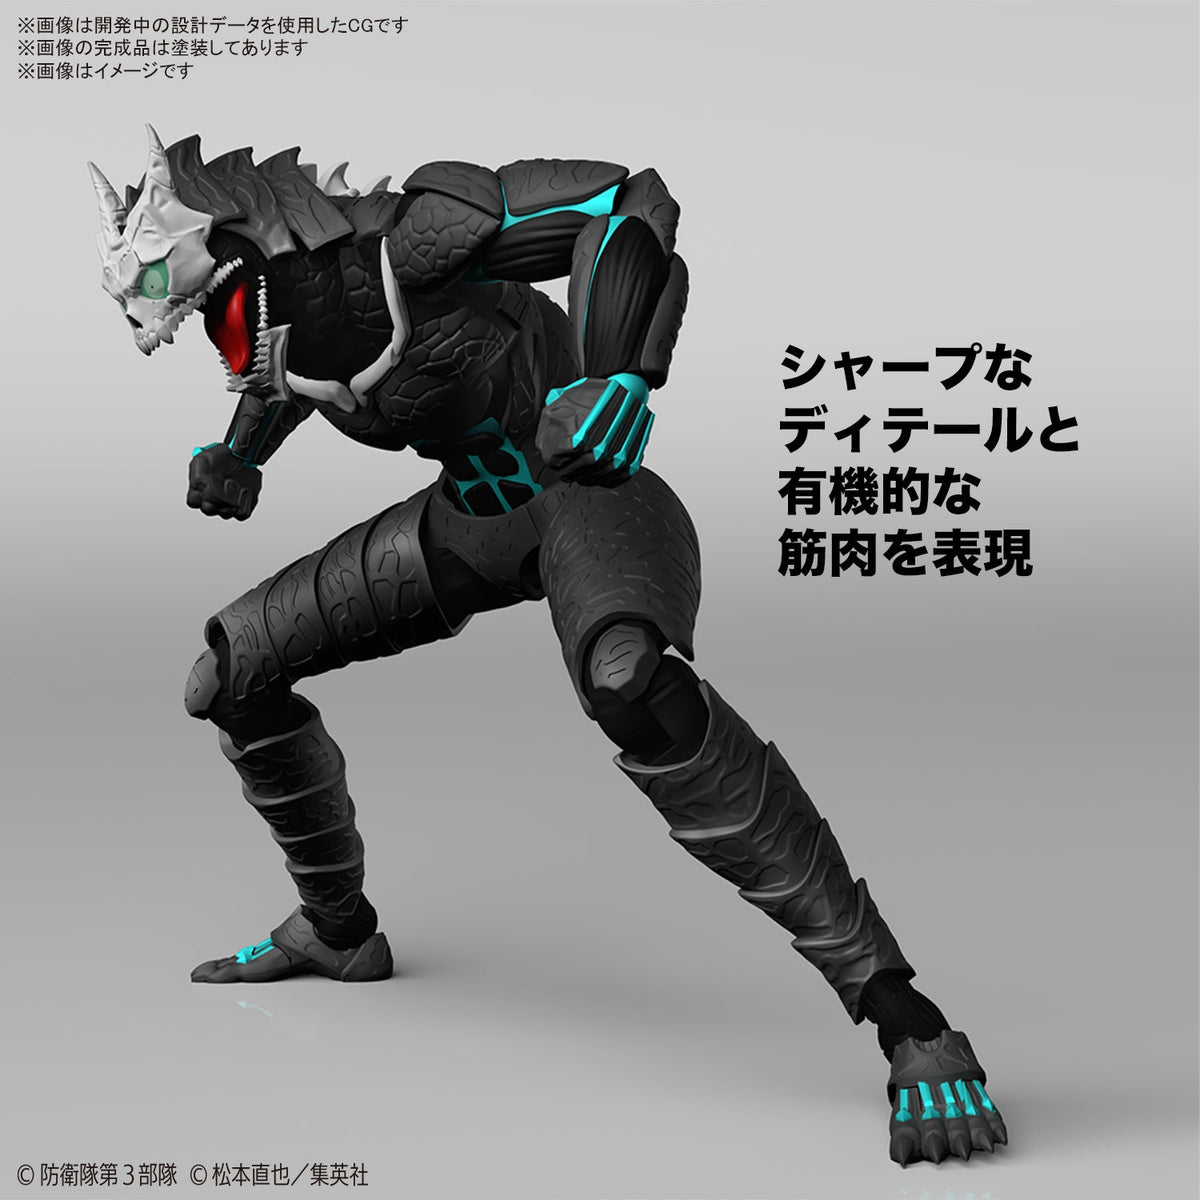 Kaiju Figure-Rise Standard No.8-Bandai-Ace Cards &amp; Collectibles